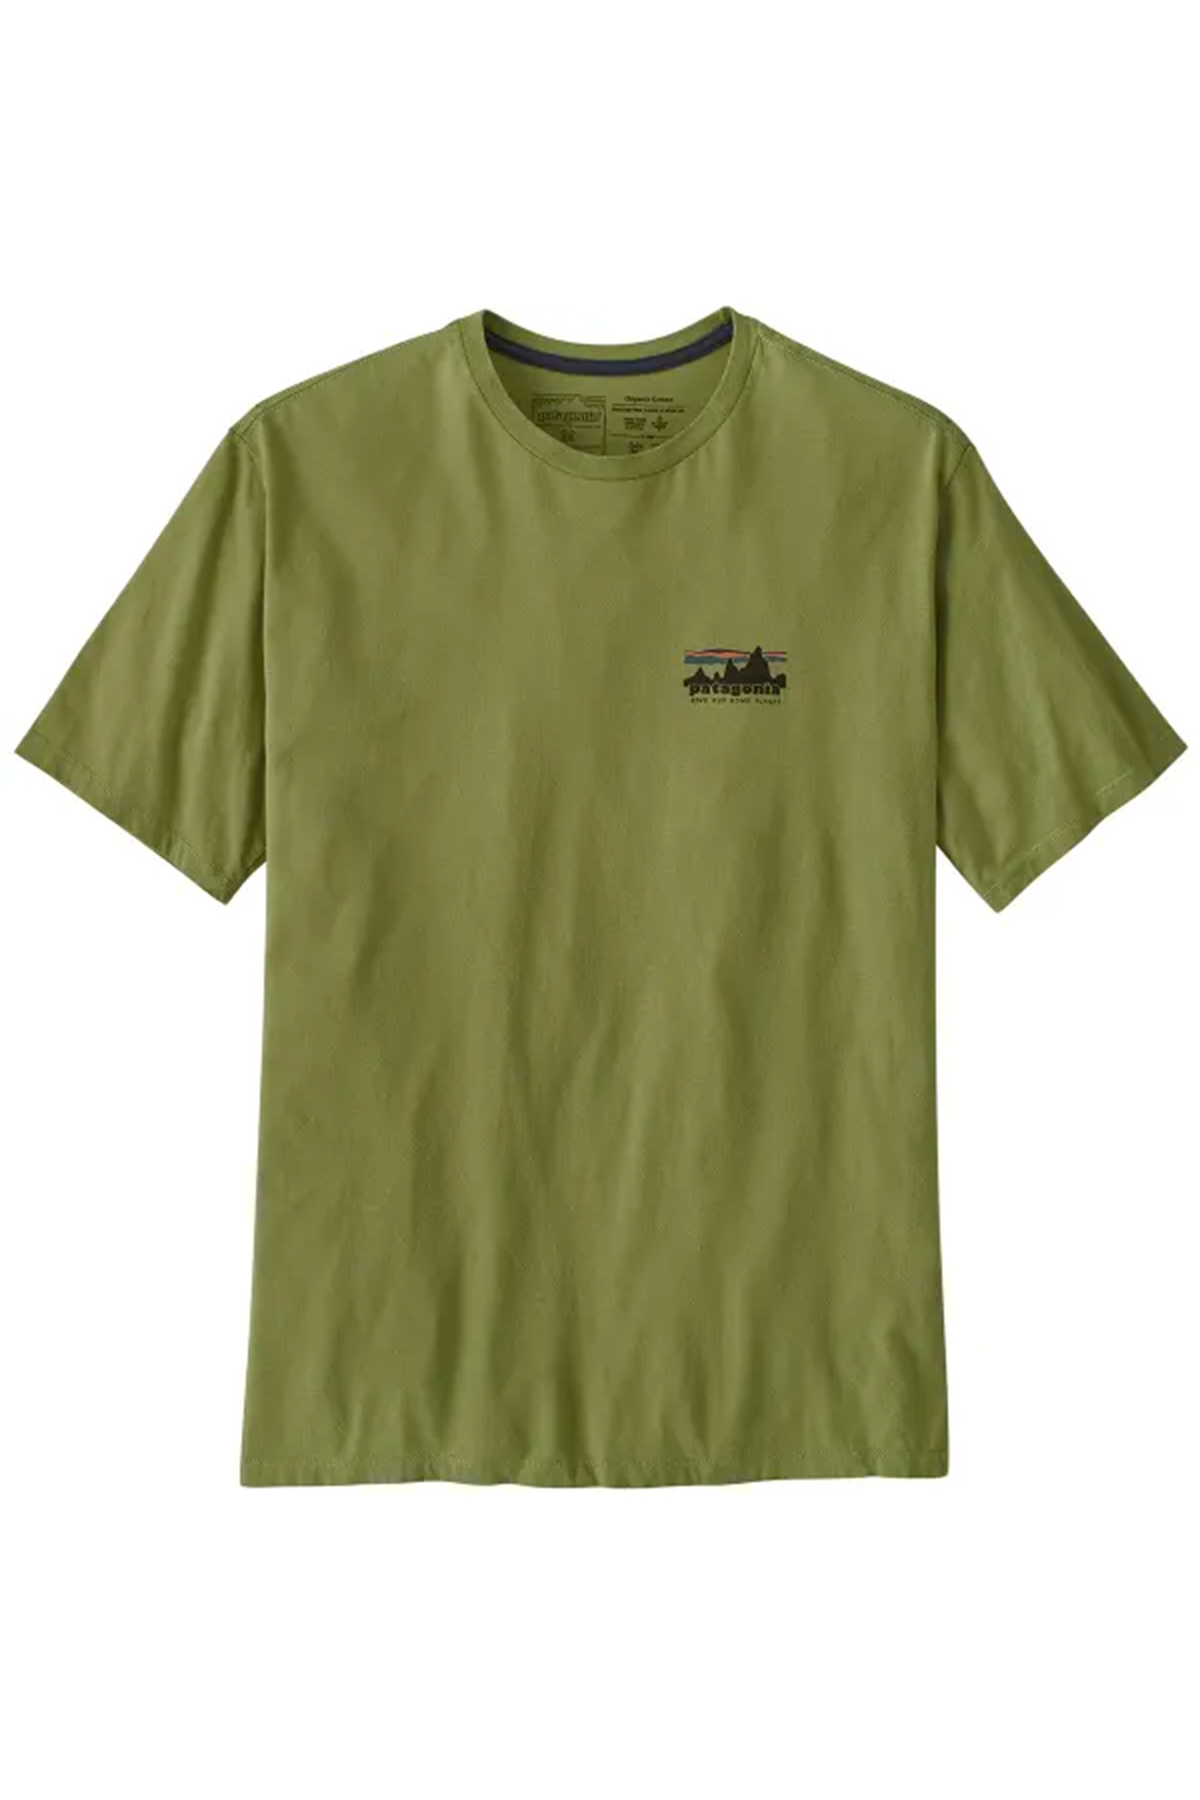 M's '73 Skyline Organic T-Shirt - Patagonia